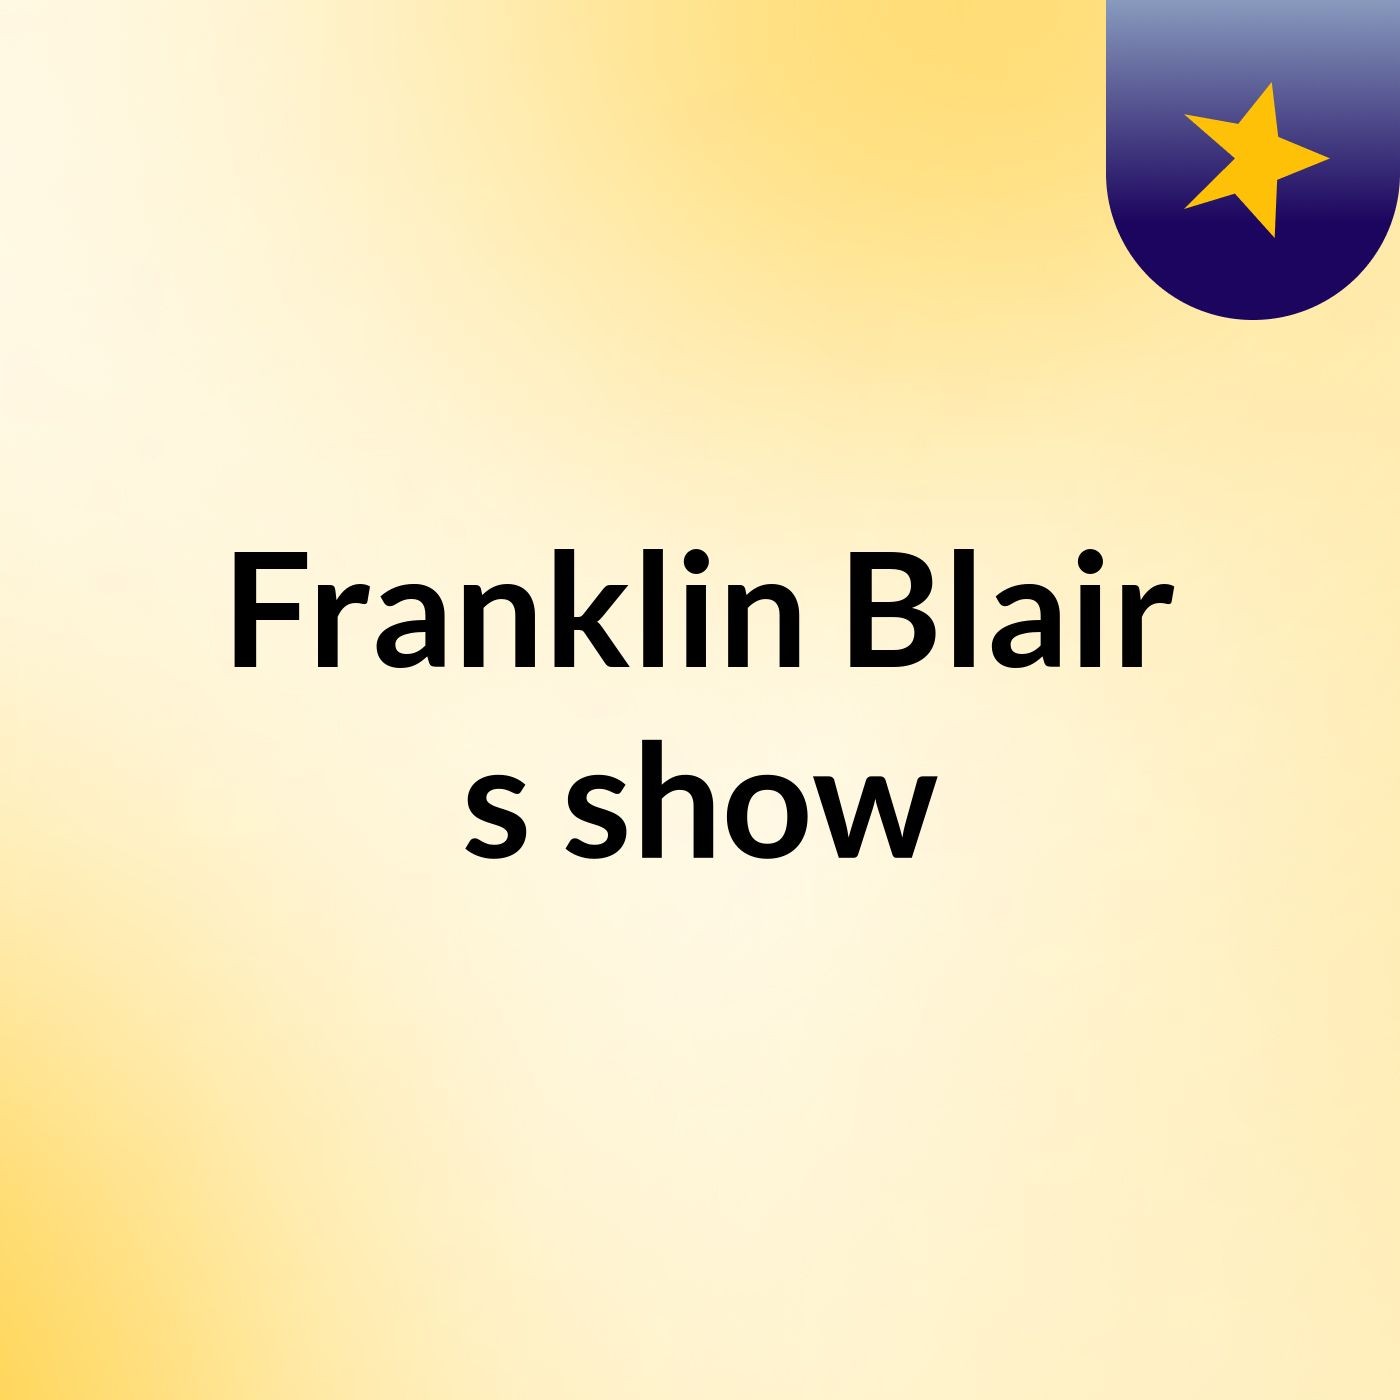 Franklin Blair's show